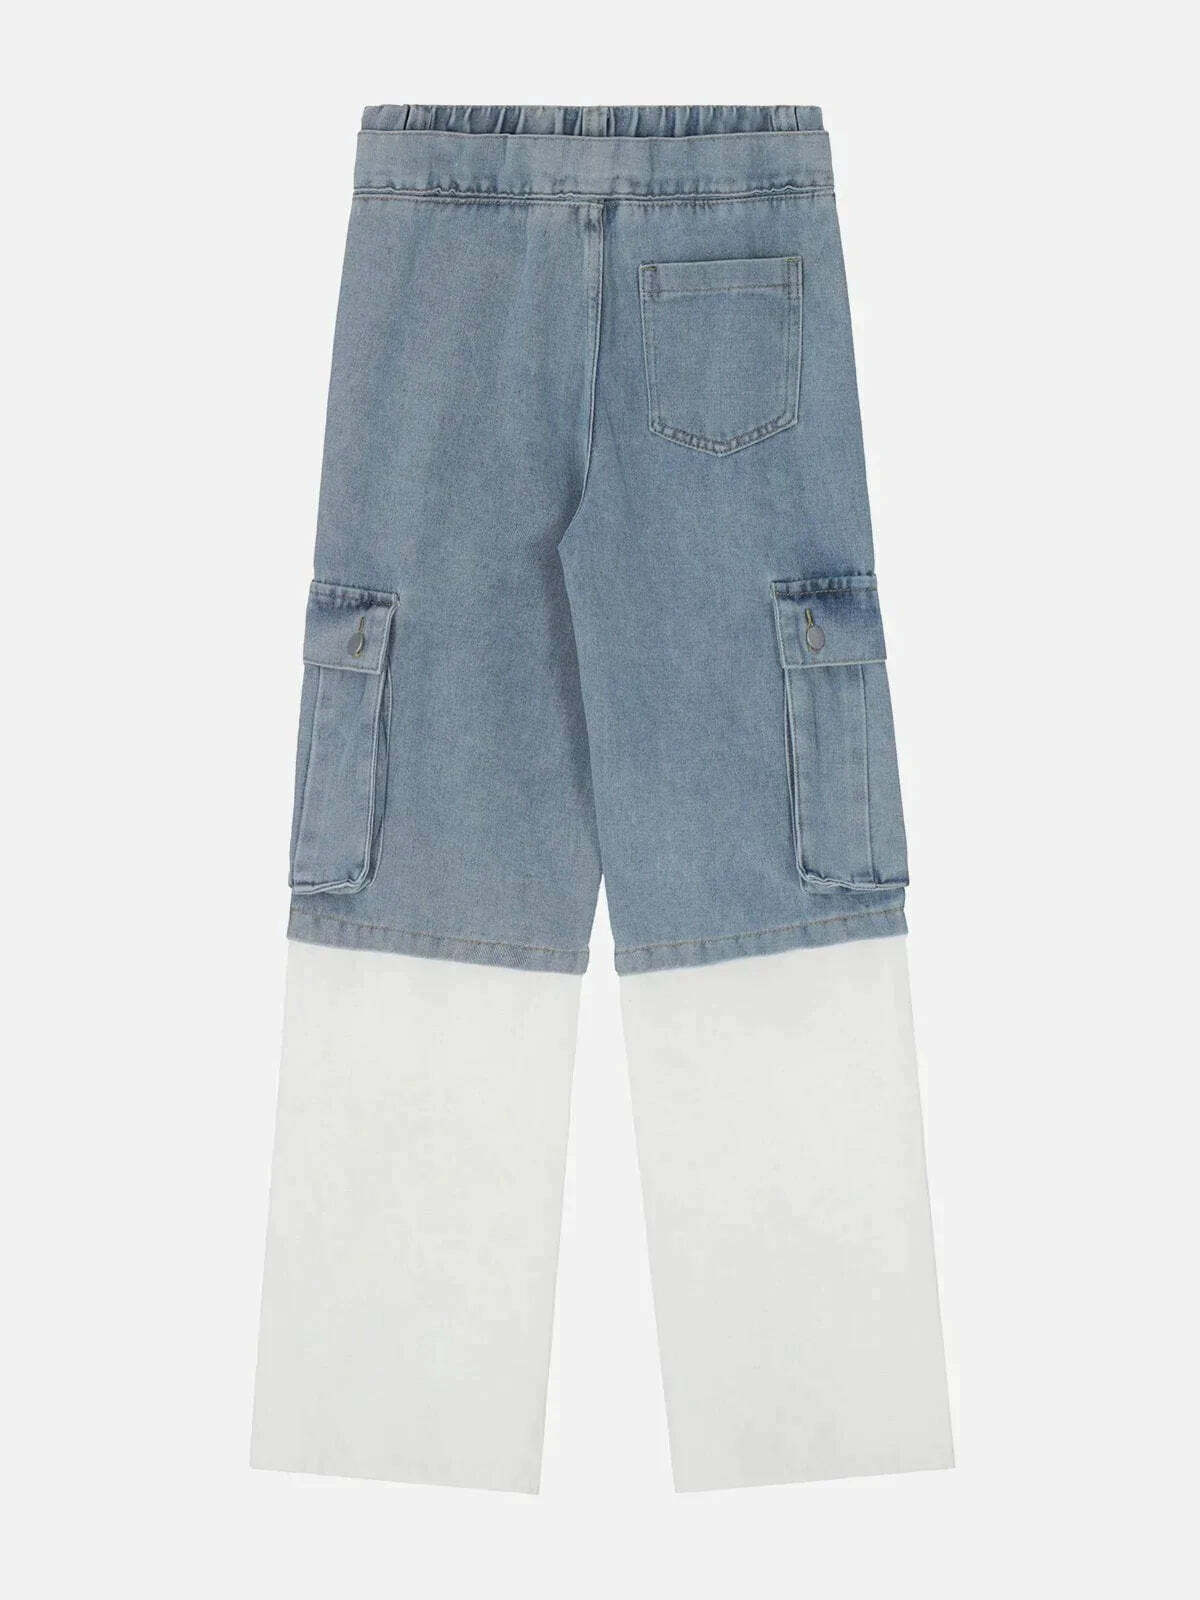 patchwork denim jeans vintage & edgy urban style 1190